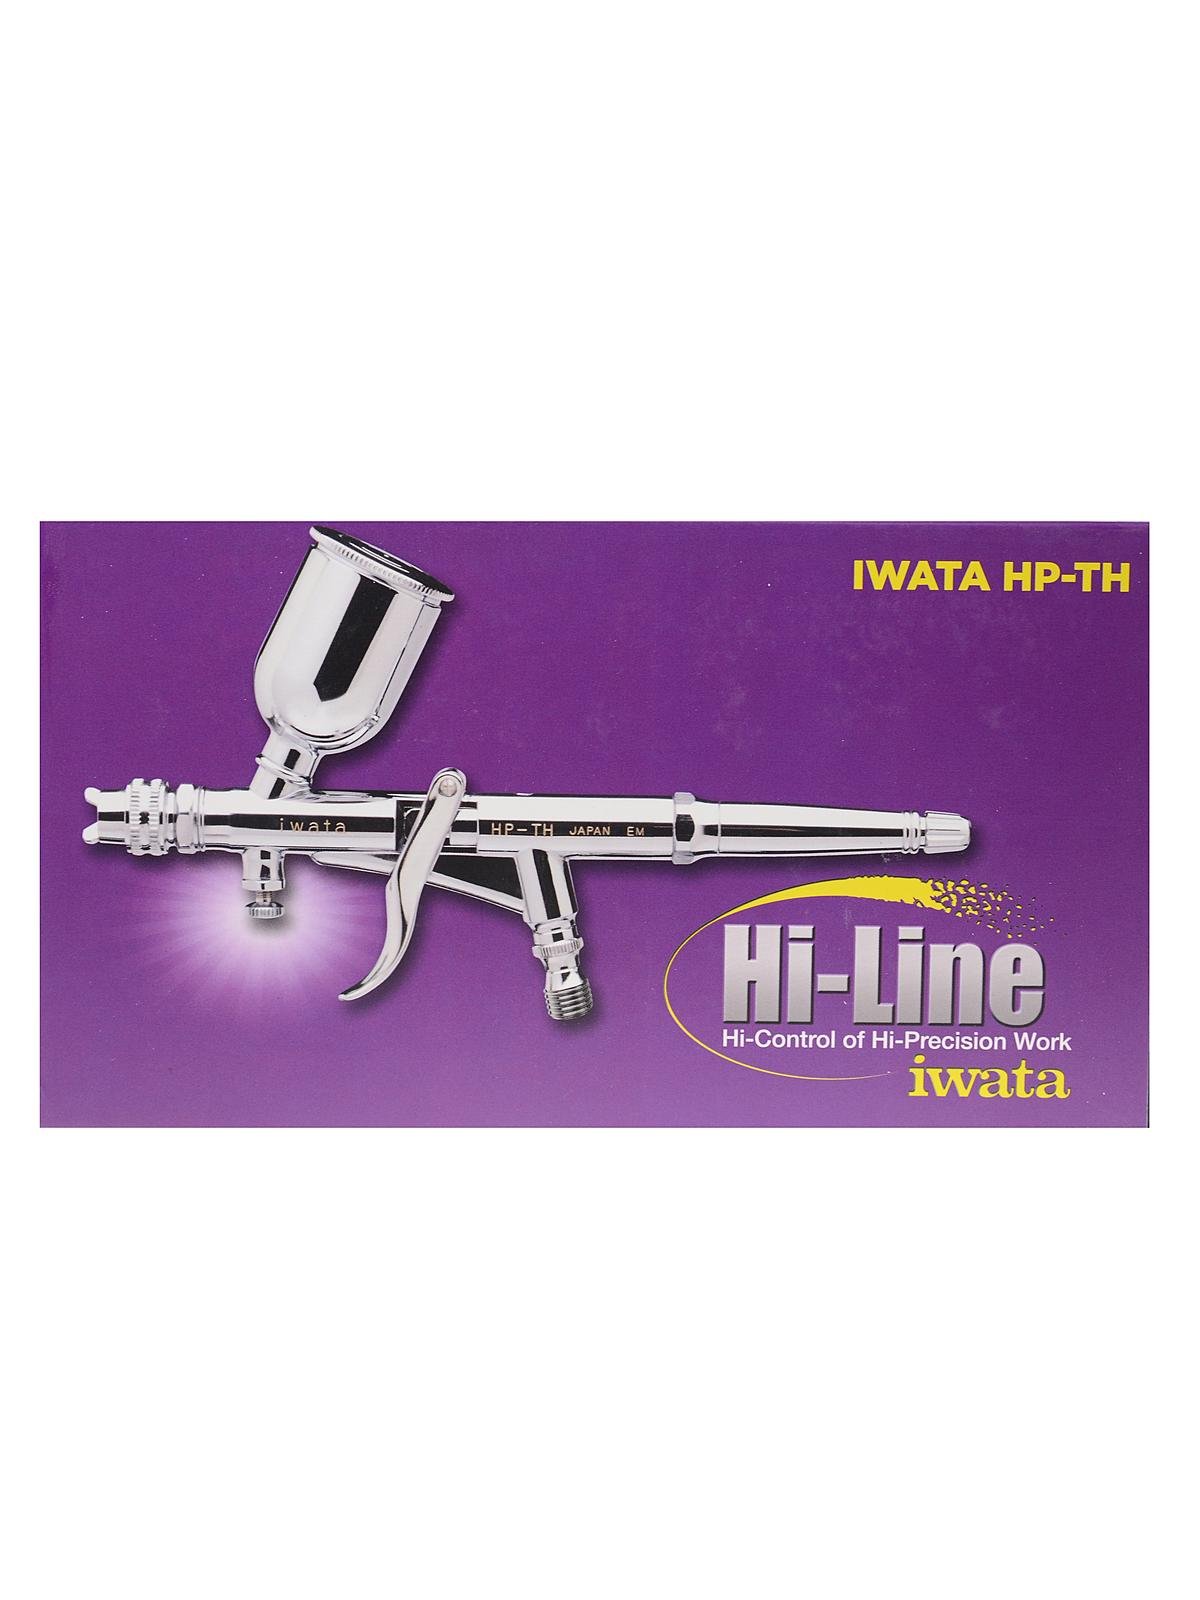 Iwata Hi-Line HP-BH Gravity Feed Dual Action Airbrush: Anest Iwata